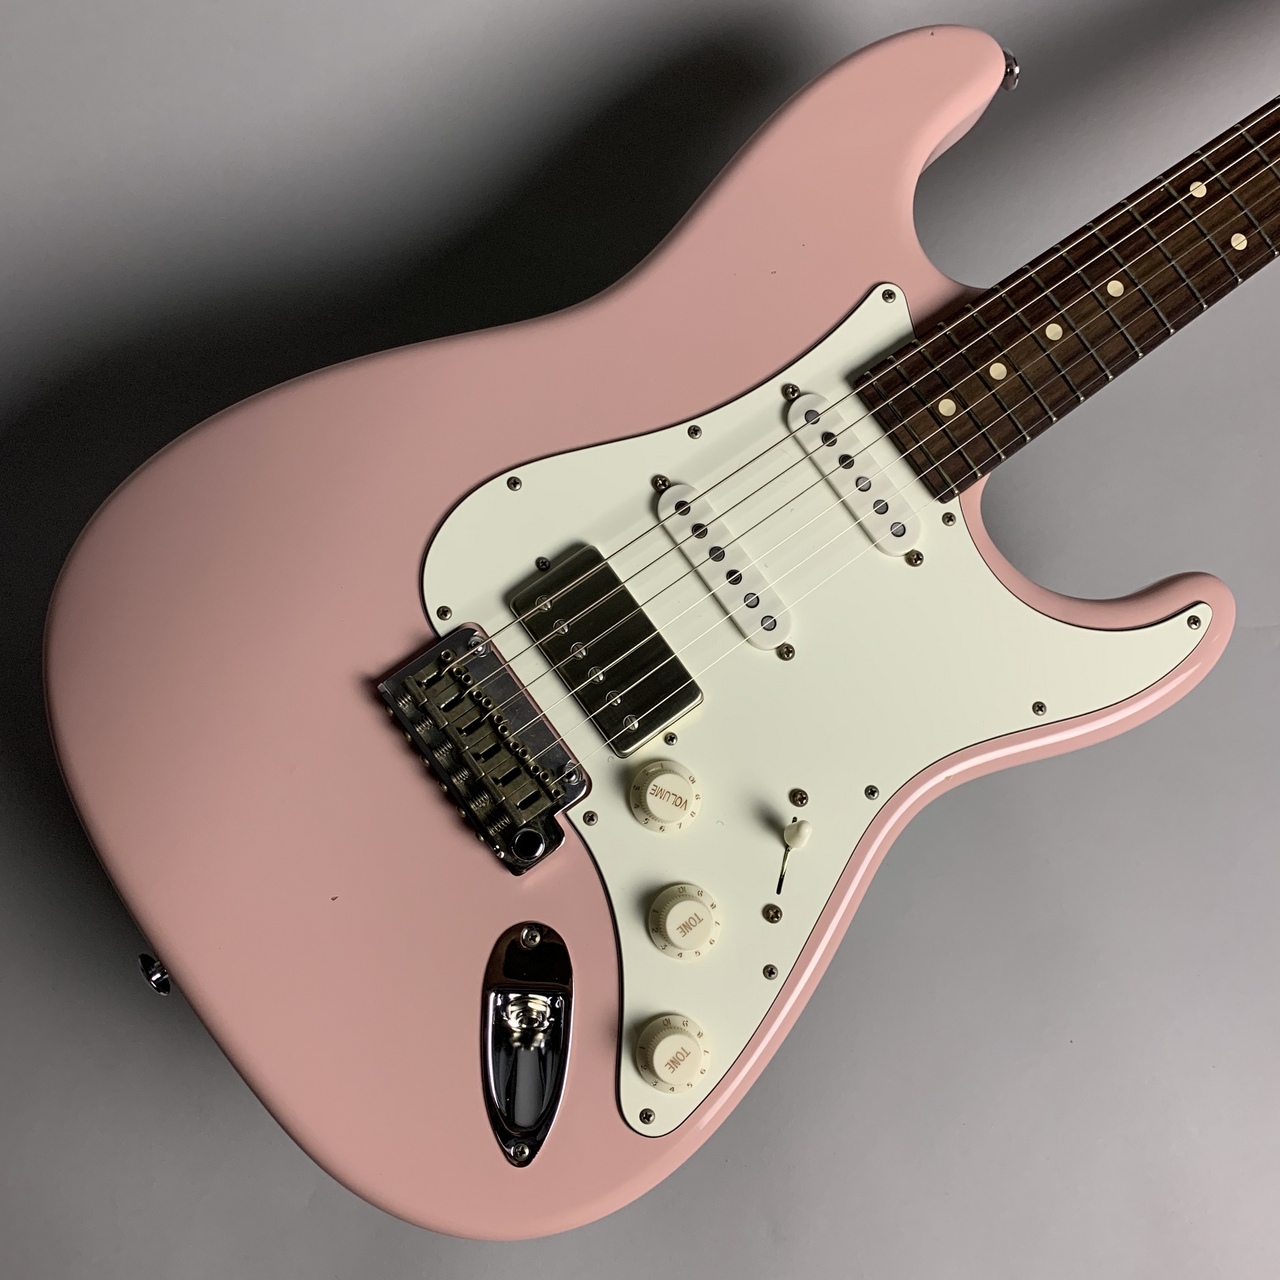 Suhr Guitarsと正規代理店が共同デザインした 2019 J Select SeriesClassic Antique Roasted Maple Neck。Shell PinkとRoasted Maple Neckのコントラストが美しい1本が島村楽器 静岡パルコ店に入荷しました！ **Su […]